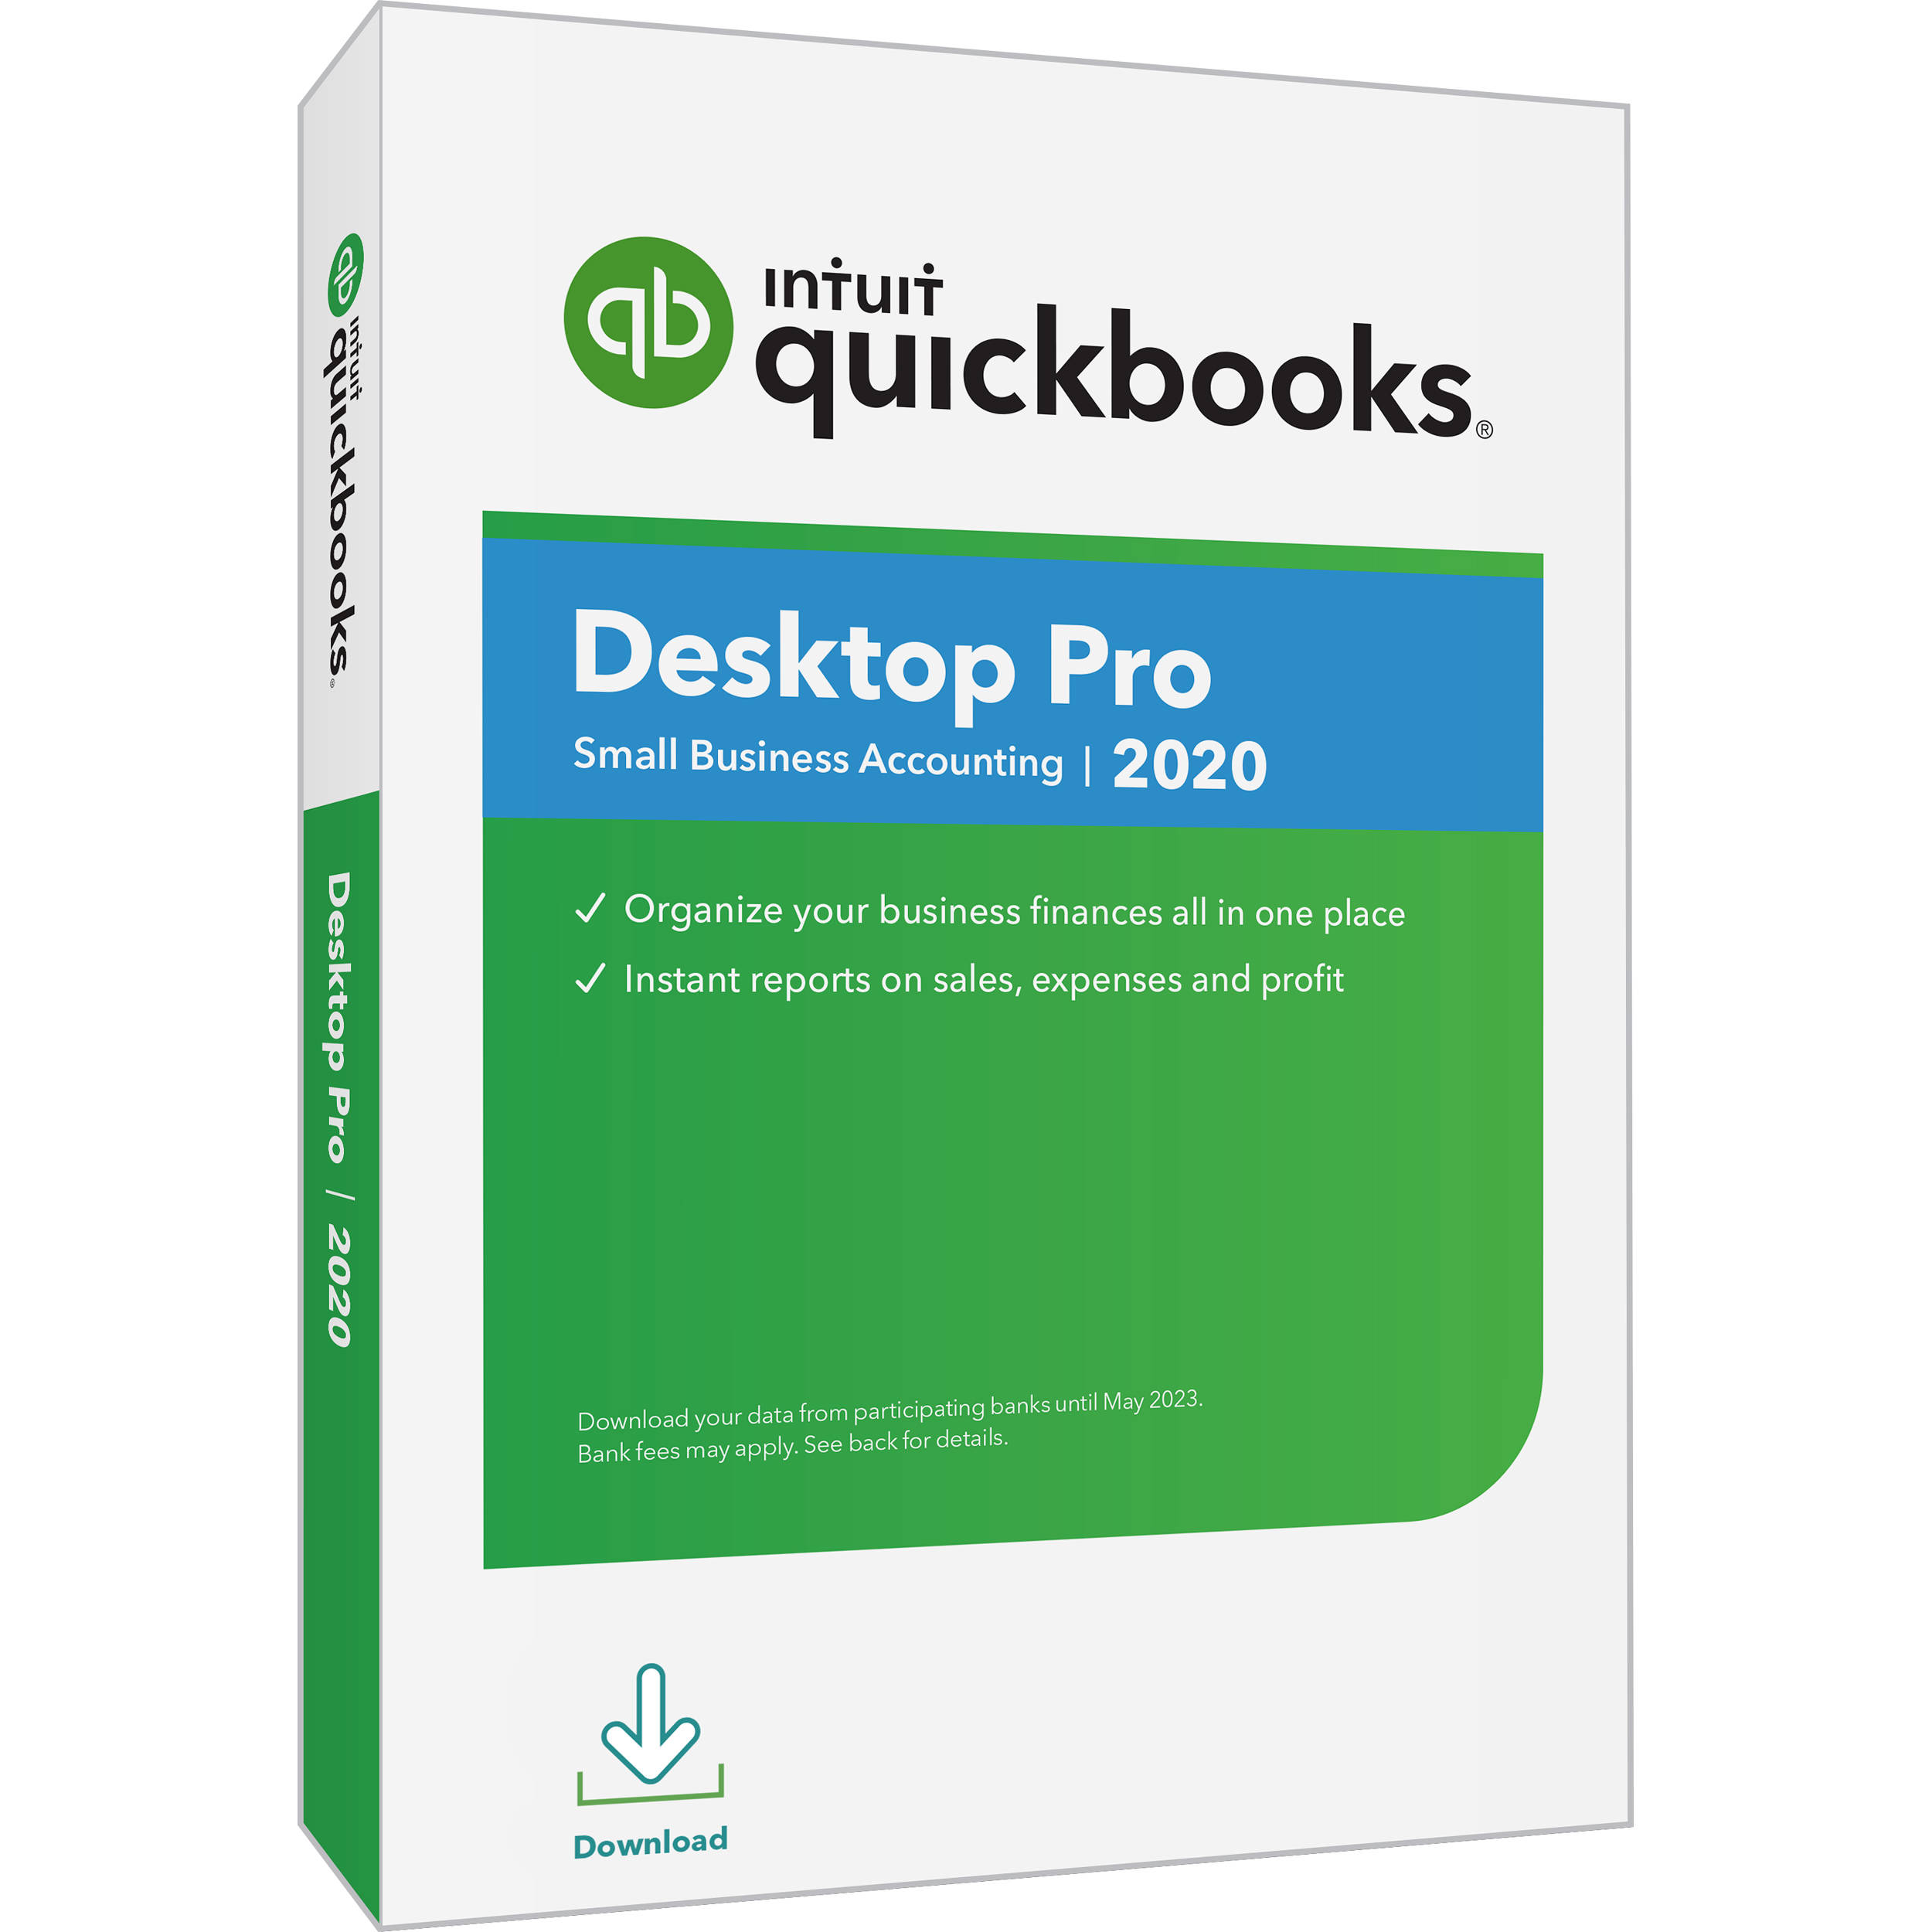 download quickbooks 2011 for mac